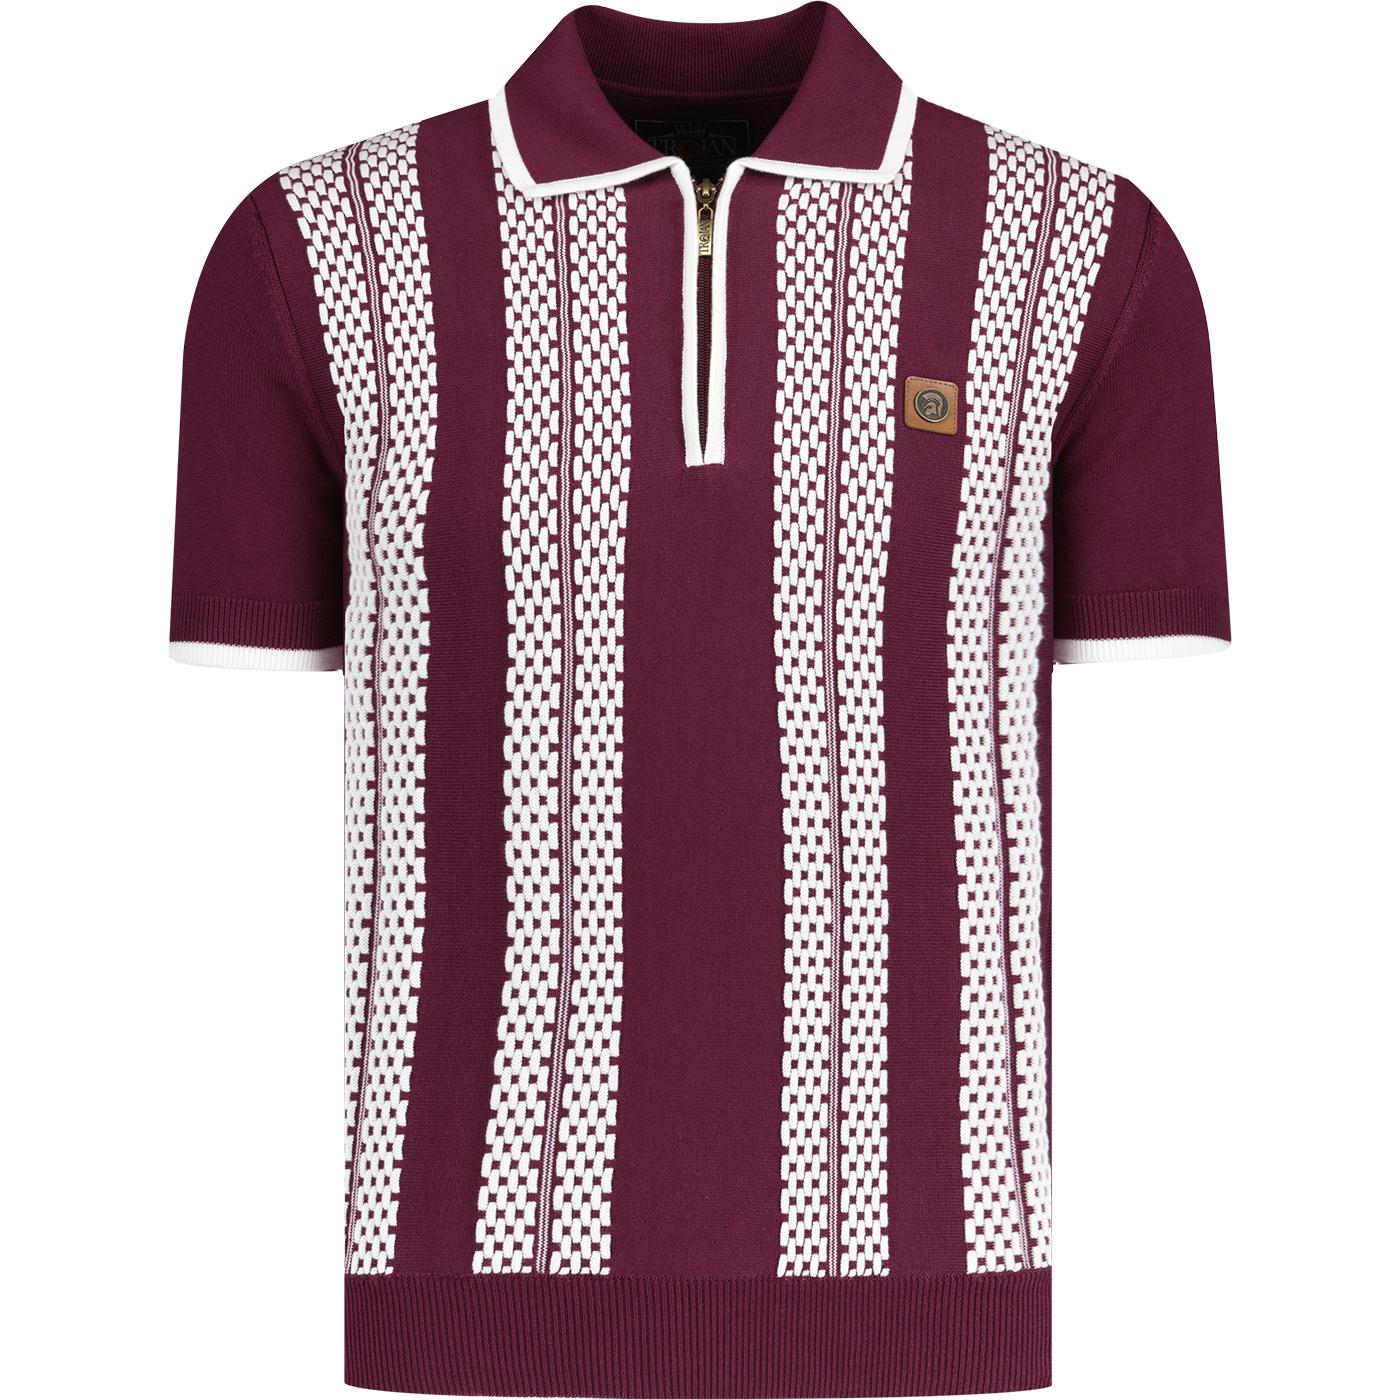 Trojan Retro Mod Textured Stripe Zip Polo Shirt P